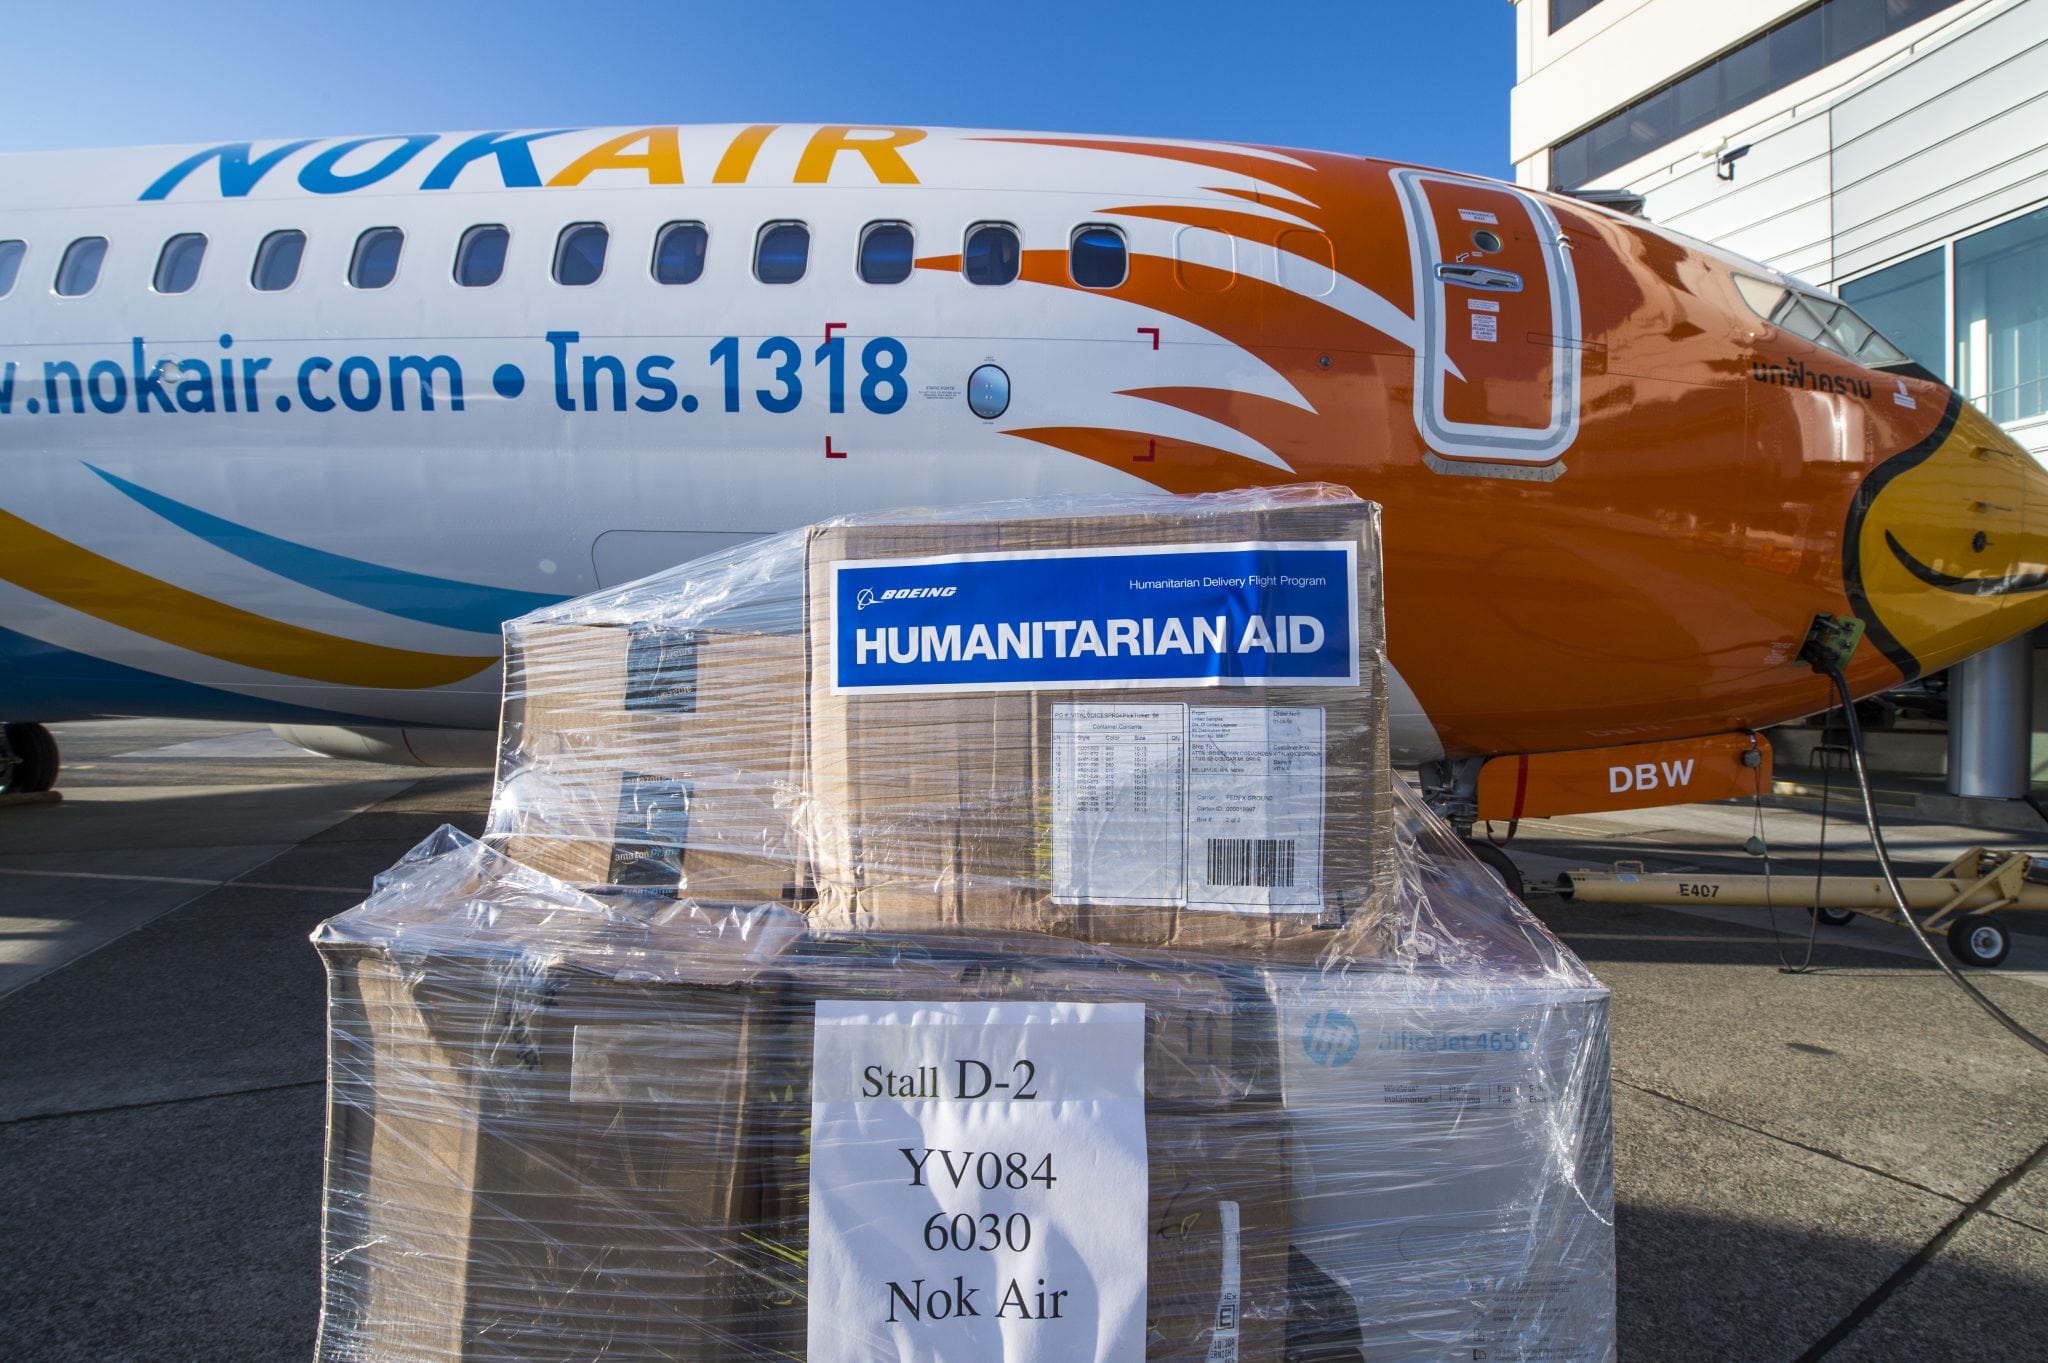 Nok Air will transport school supplies, clothing to children in Thailand on Next-Generation 737-800 delivery flight